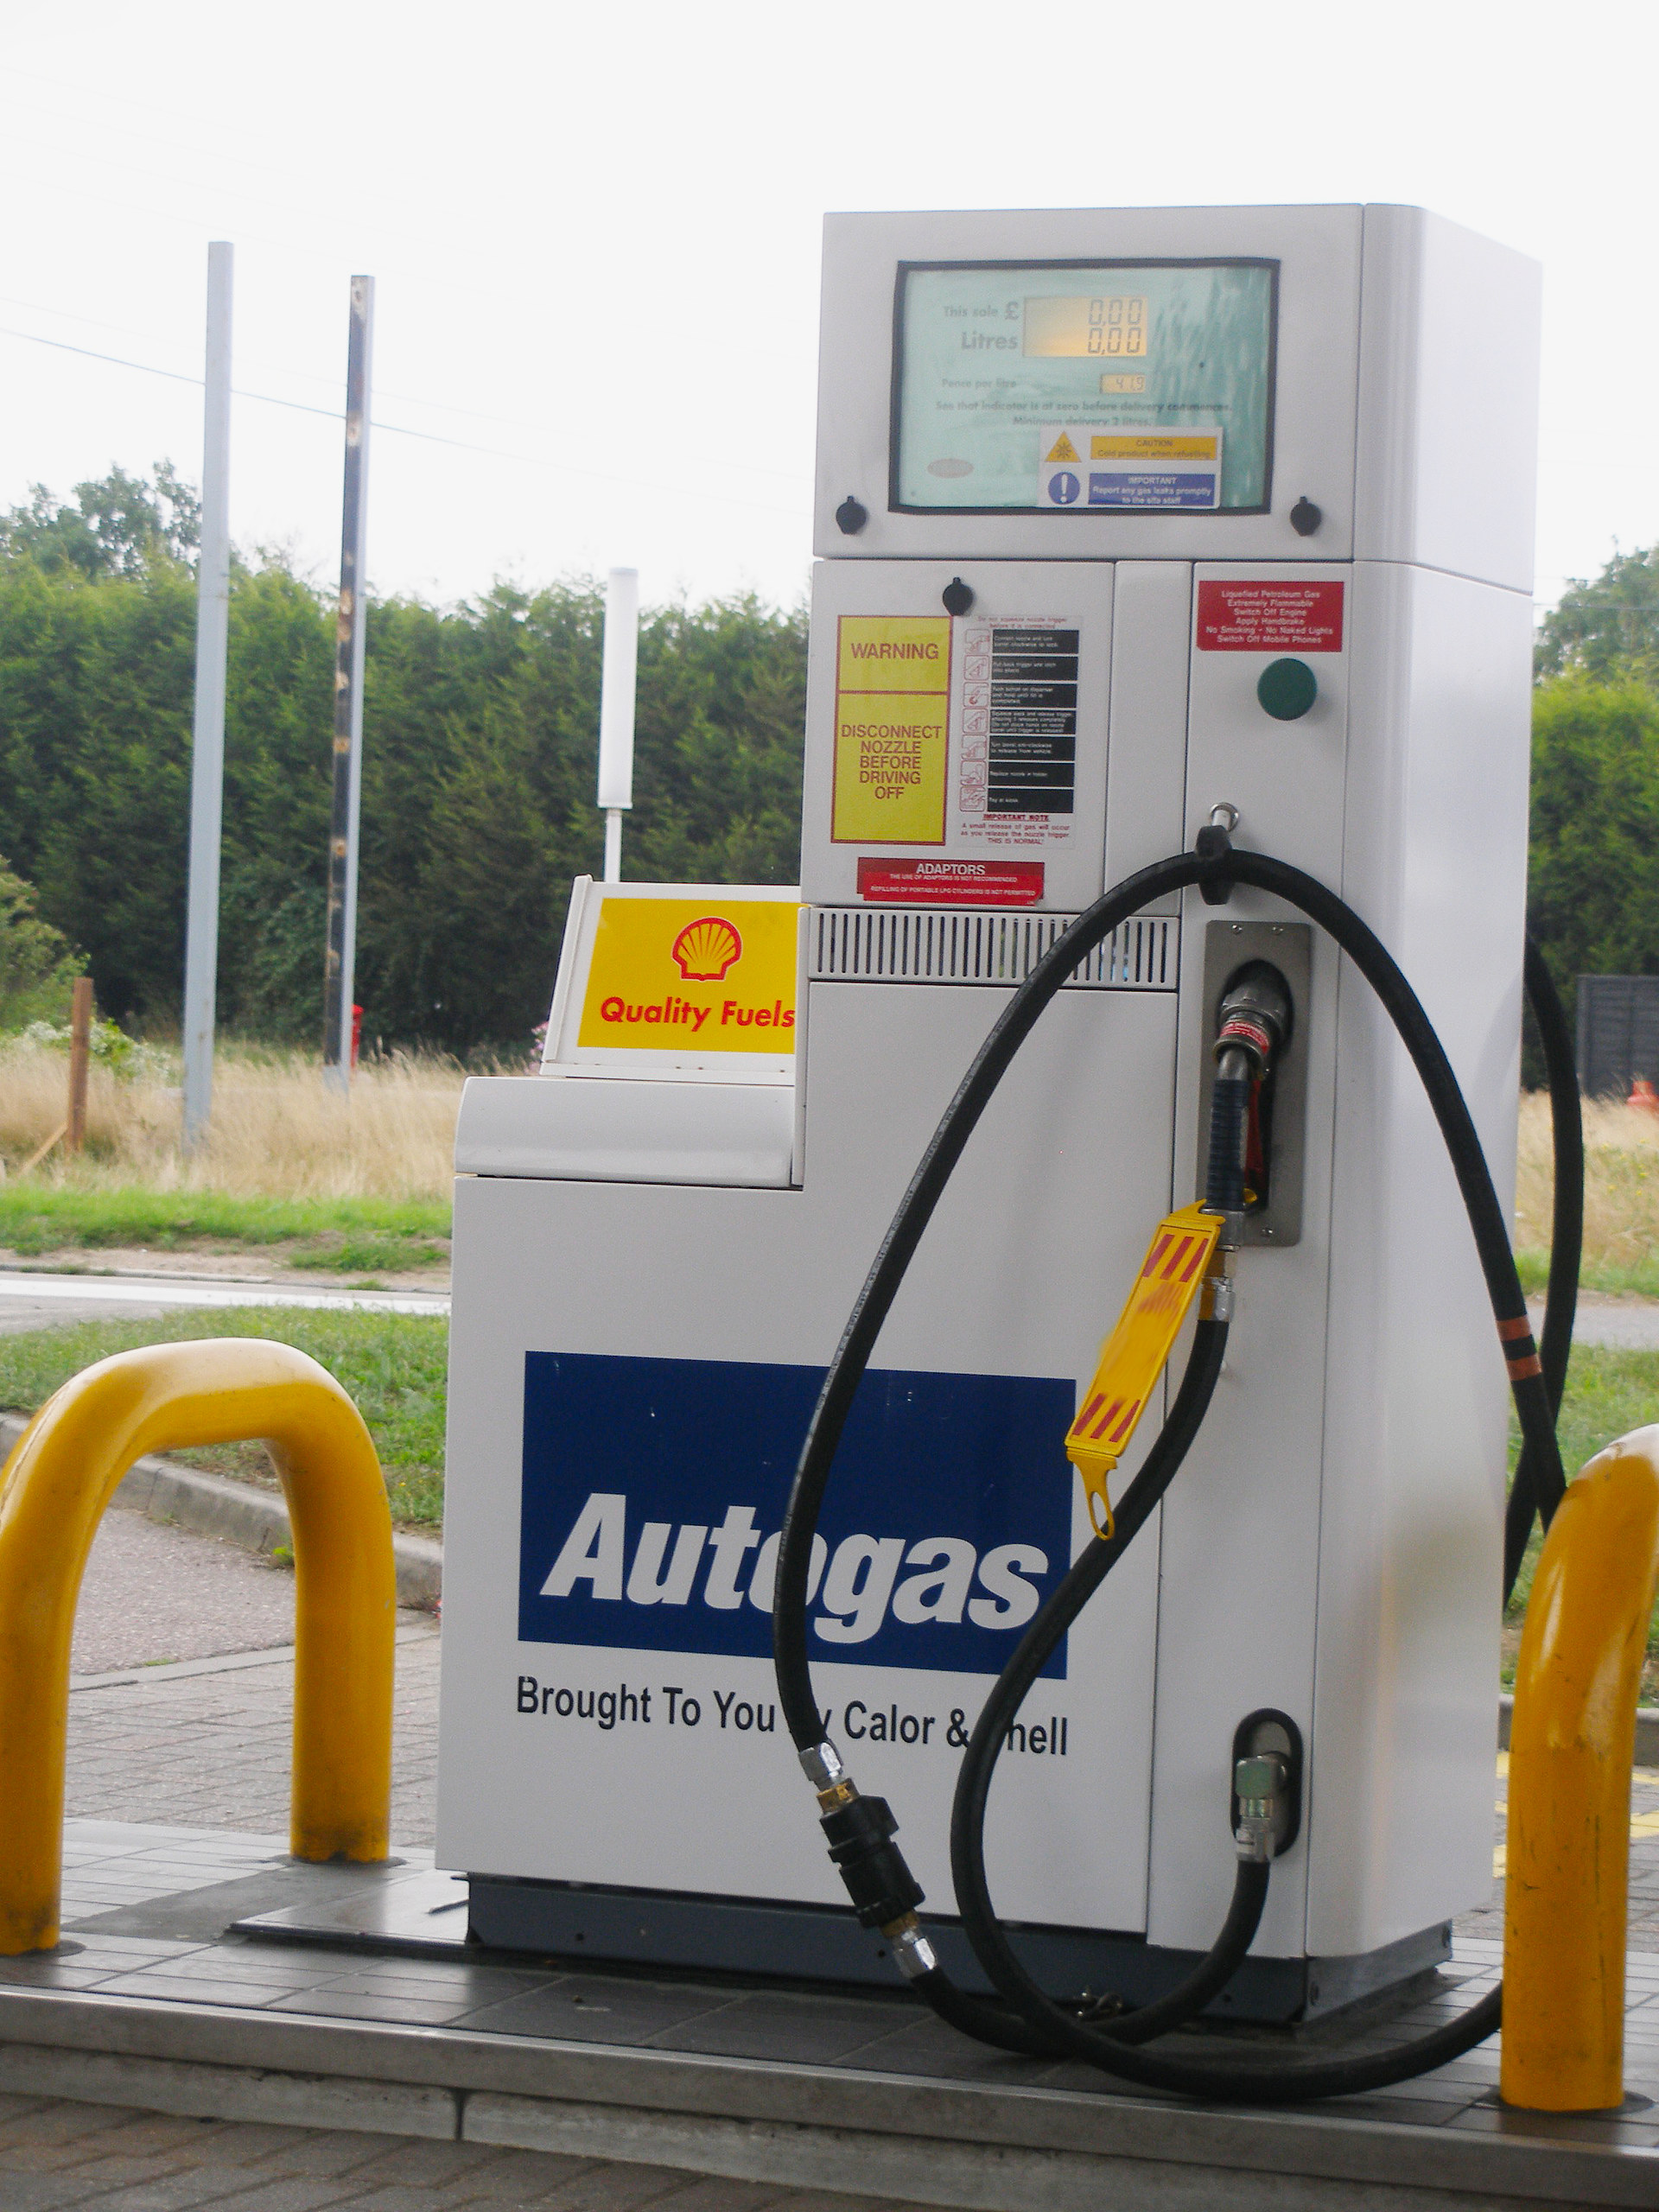 UK Autogas Pump for refilling rv propane